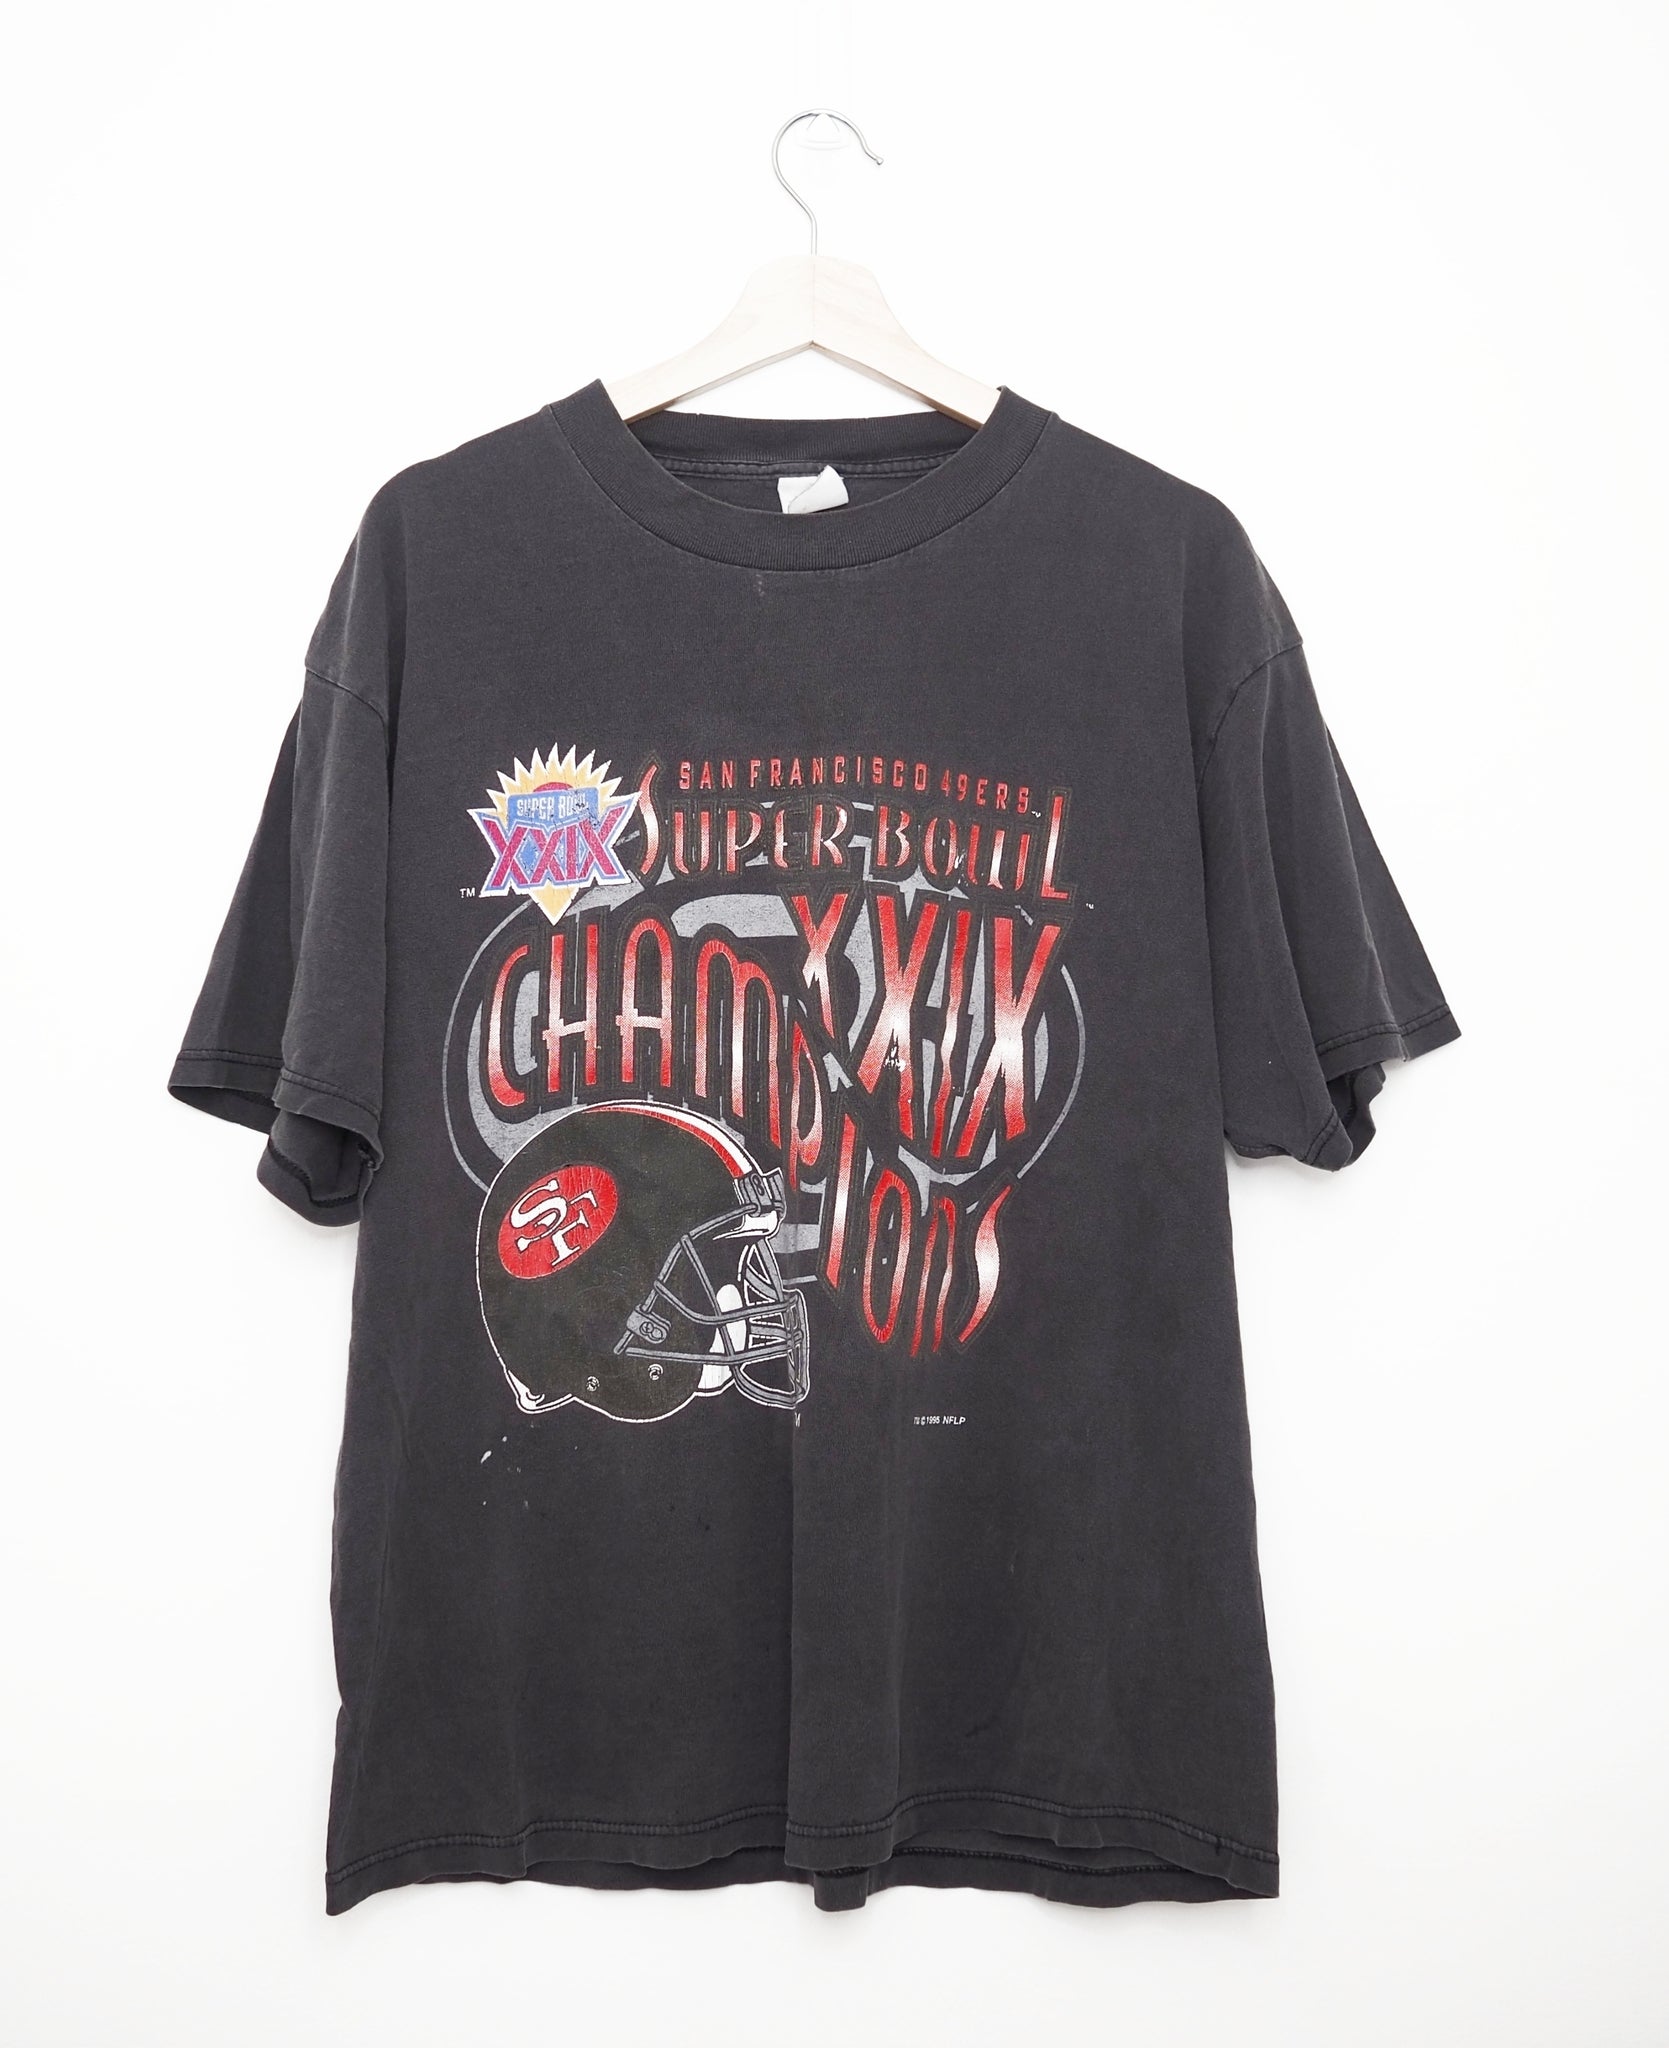 San Fransisco 49ers Superbowl Championship T-shirt 1995